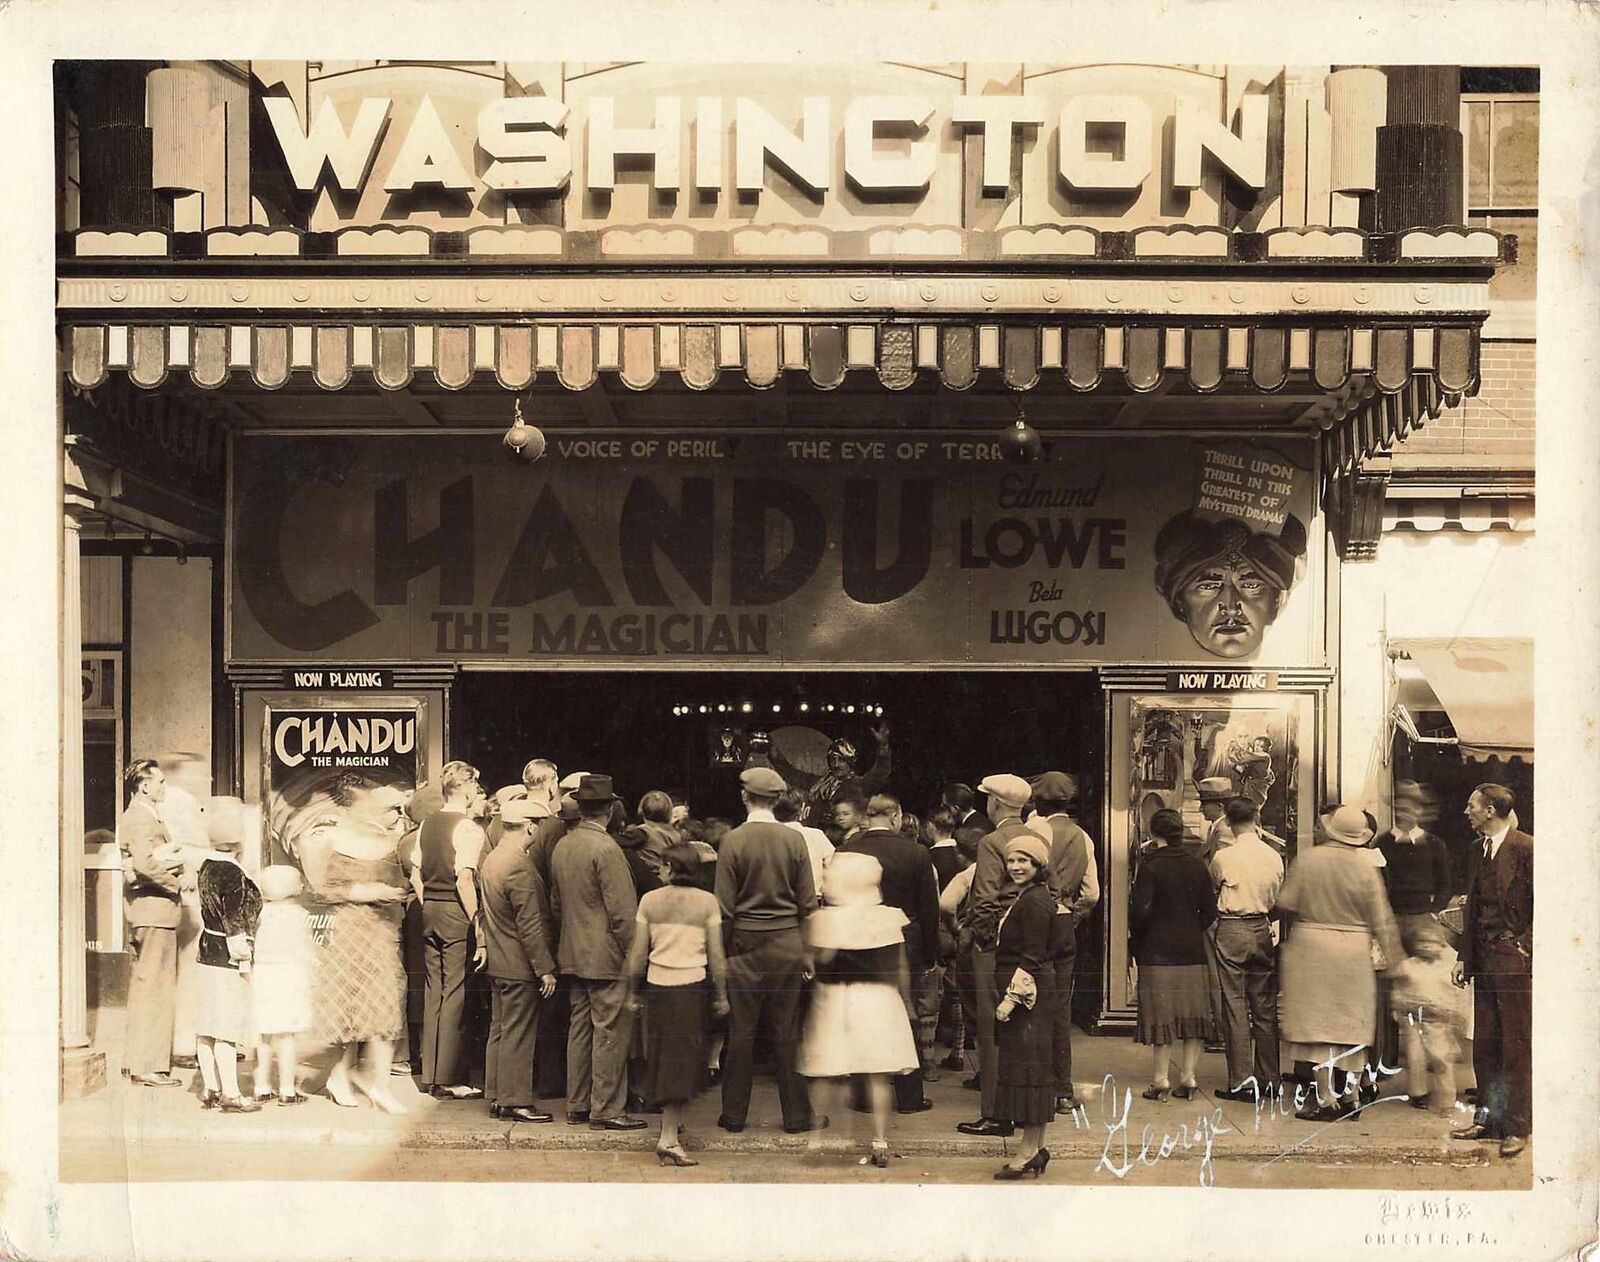 CHANDU THE MAGICIAN 1932 Washington Theatre Marquee Photo Bela Lugosi Crowd WOW 